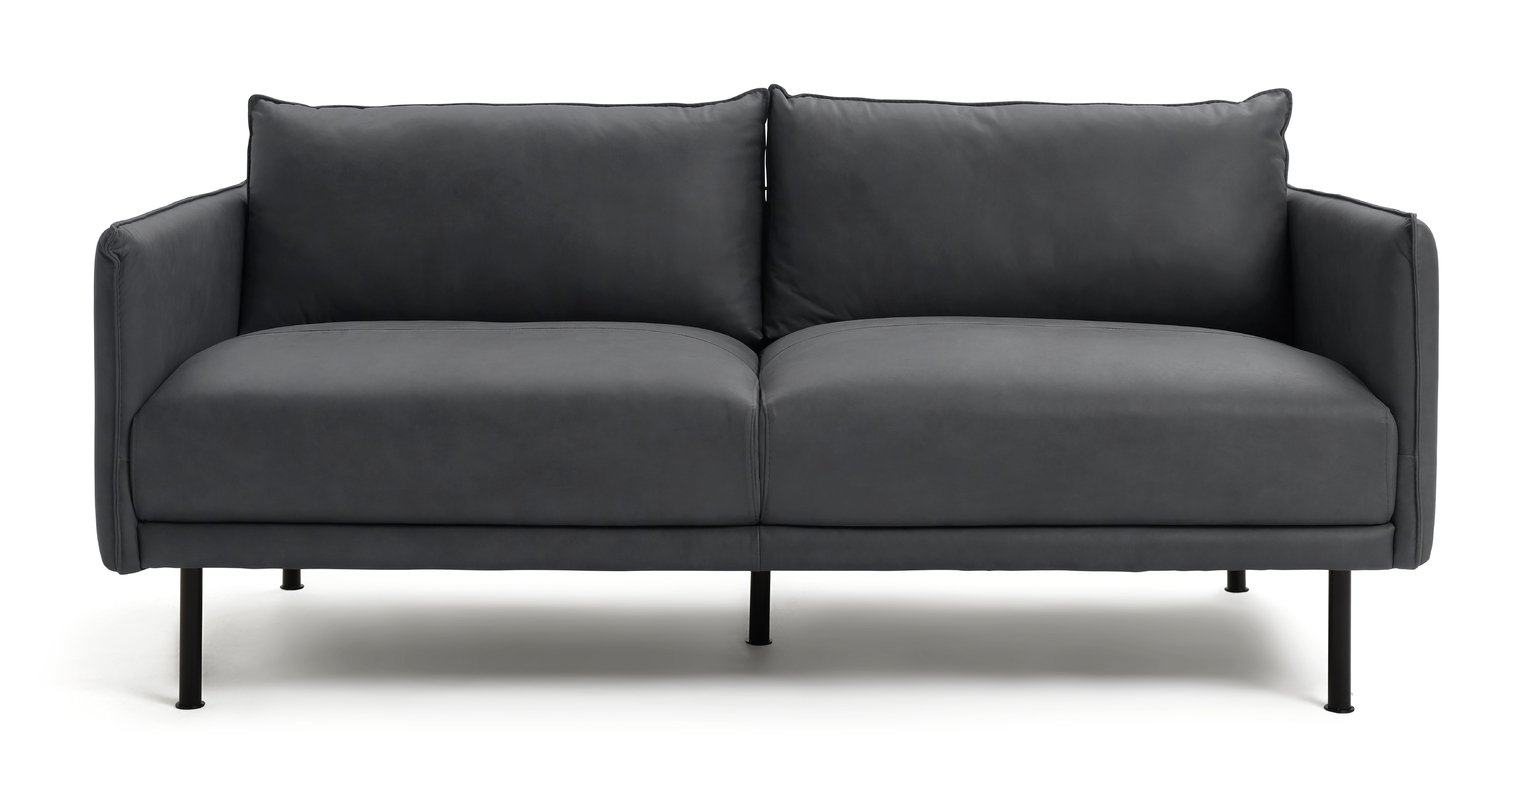 Habitat Moore Leather 3 Seater Sofa - Dark Grey